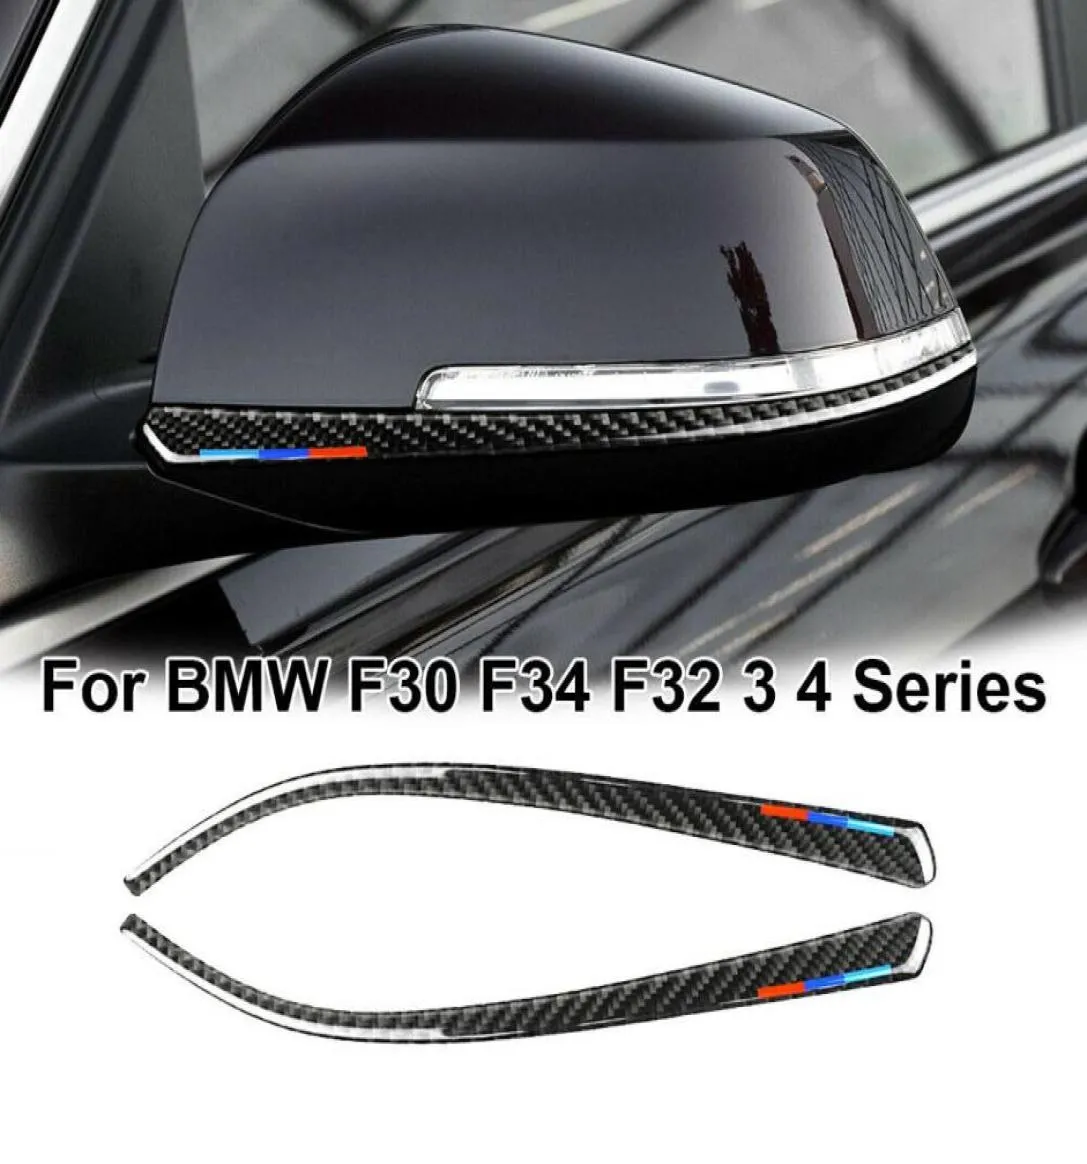 2x Car Rearview Mirror Strip Trim Sticker Cover For BMW F30 F31 F32 F33 F34 AL01 Car Styling Accessories6706284